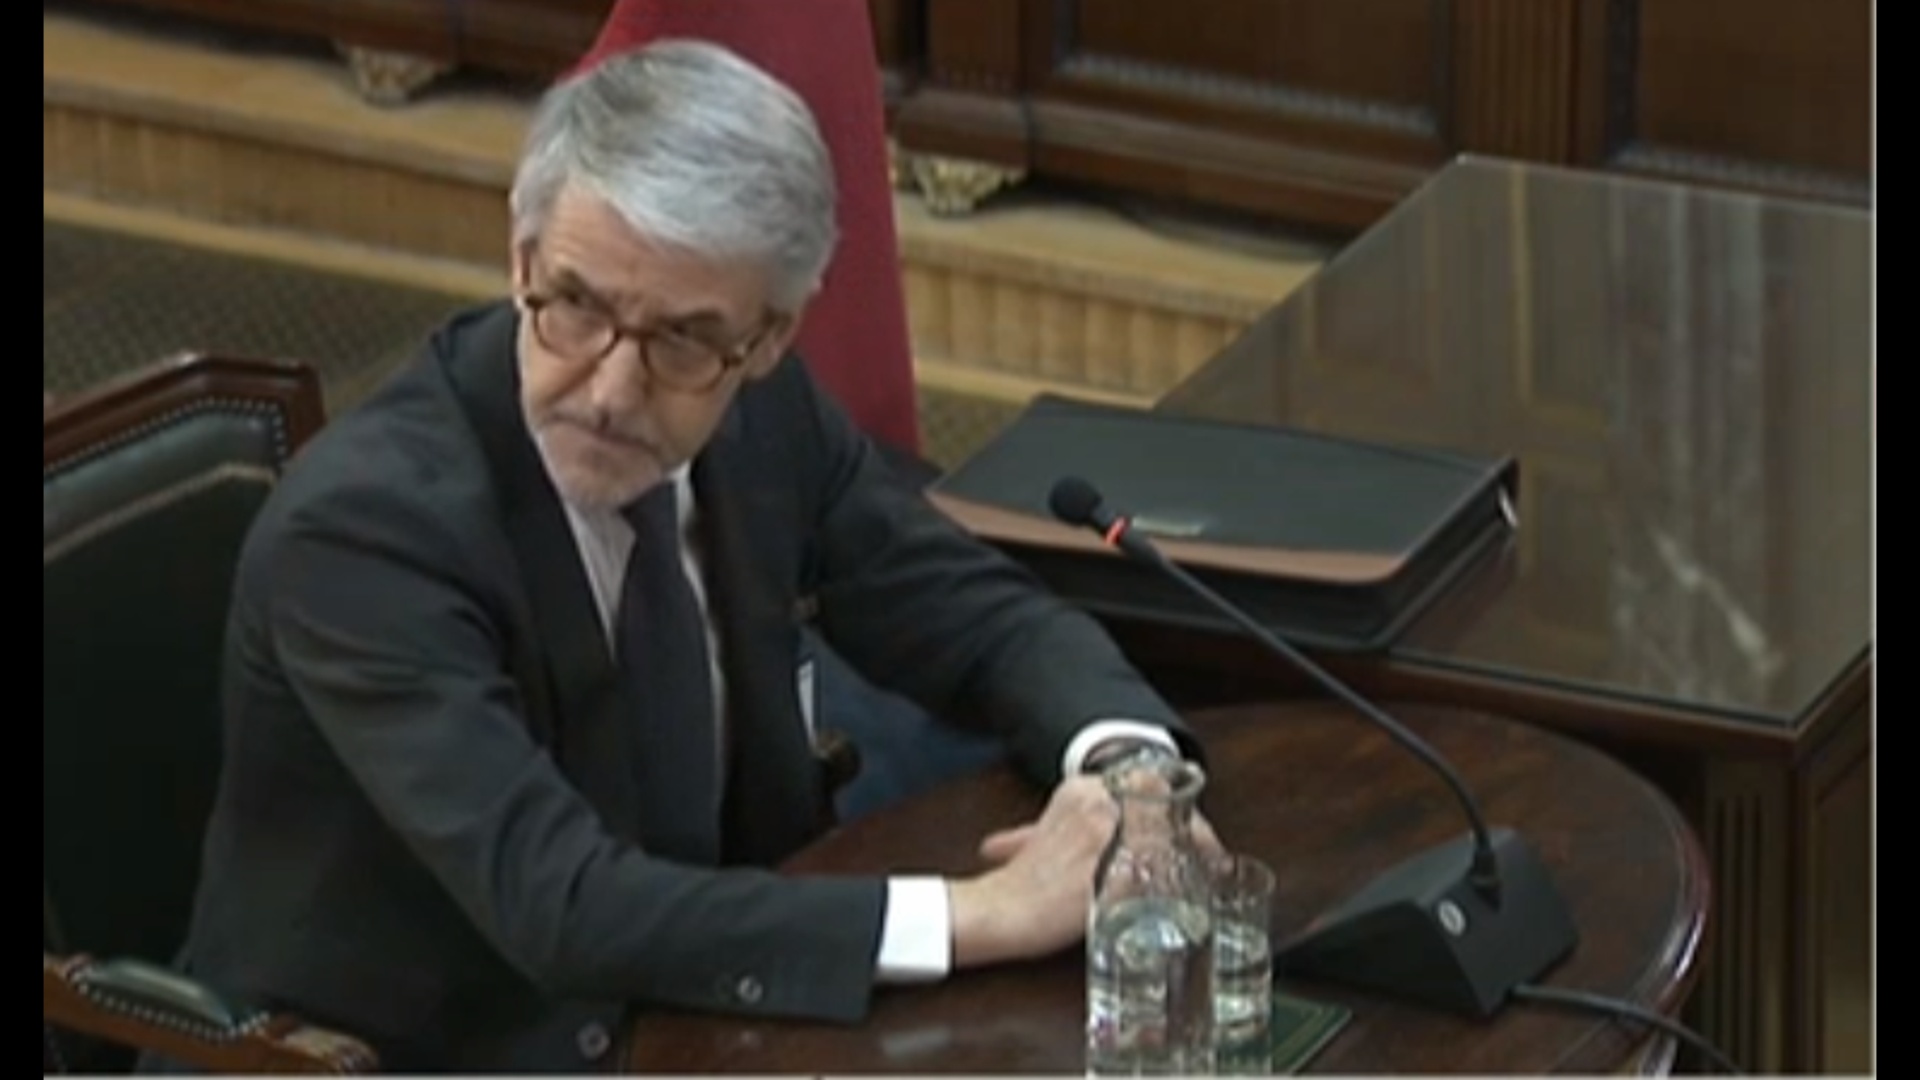 Juan Antonio Puigserver testifying in court at the Catalan Trial